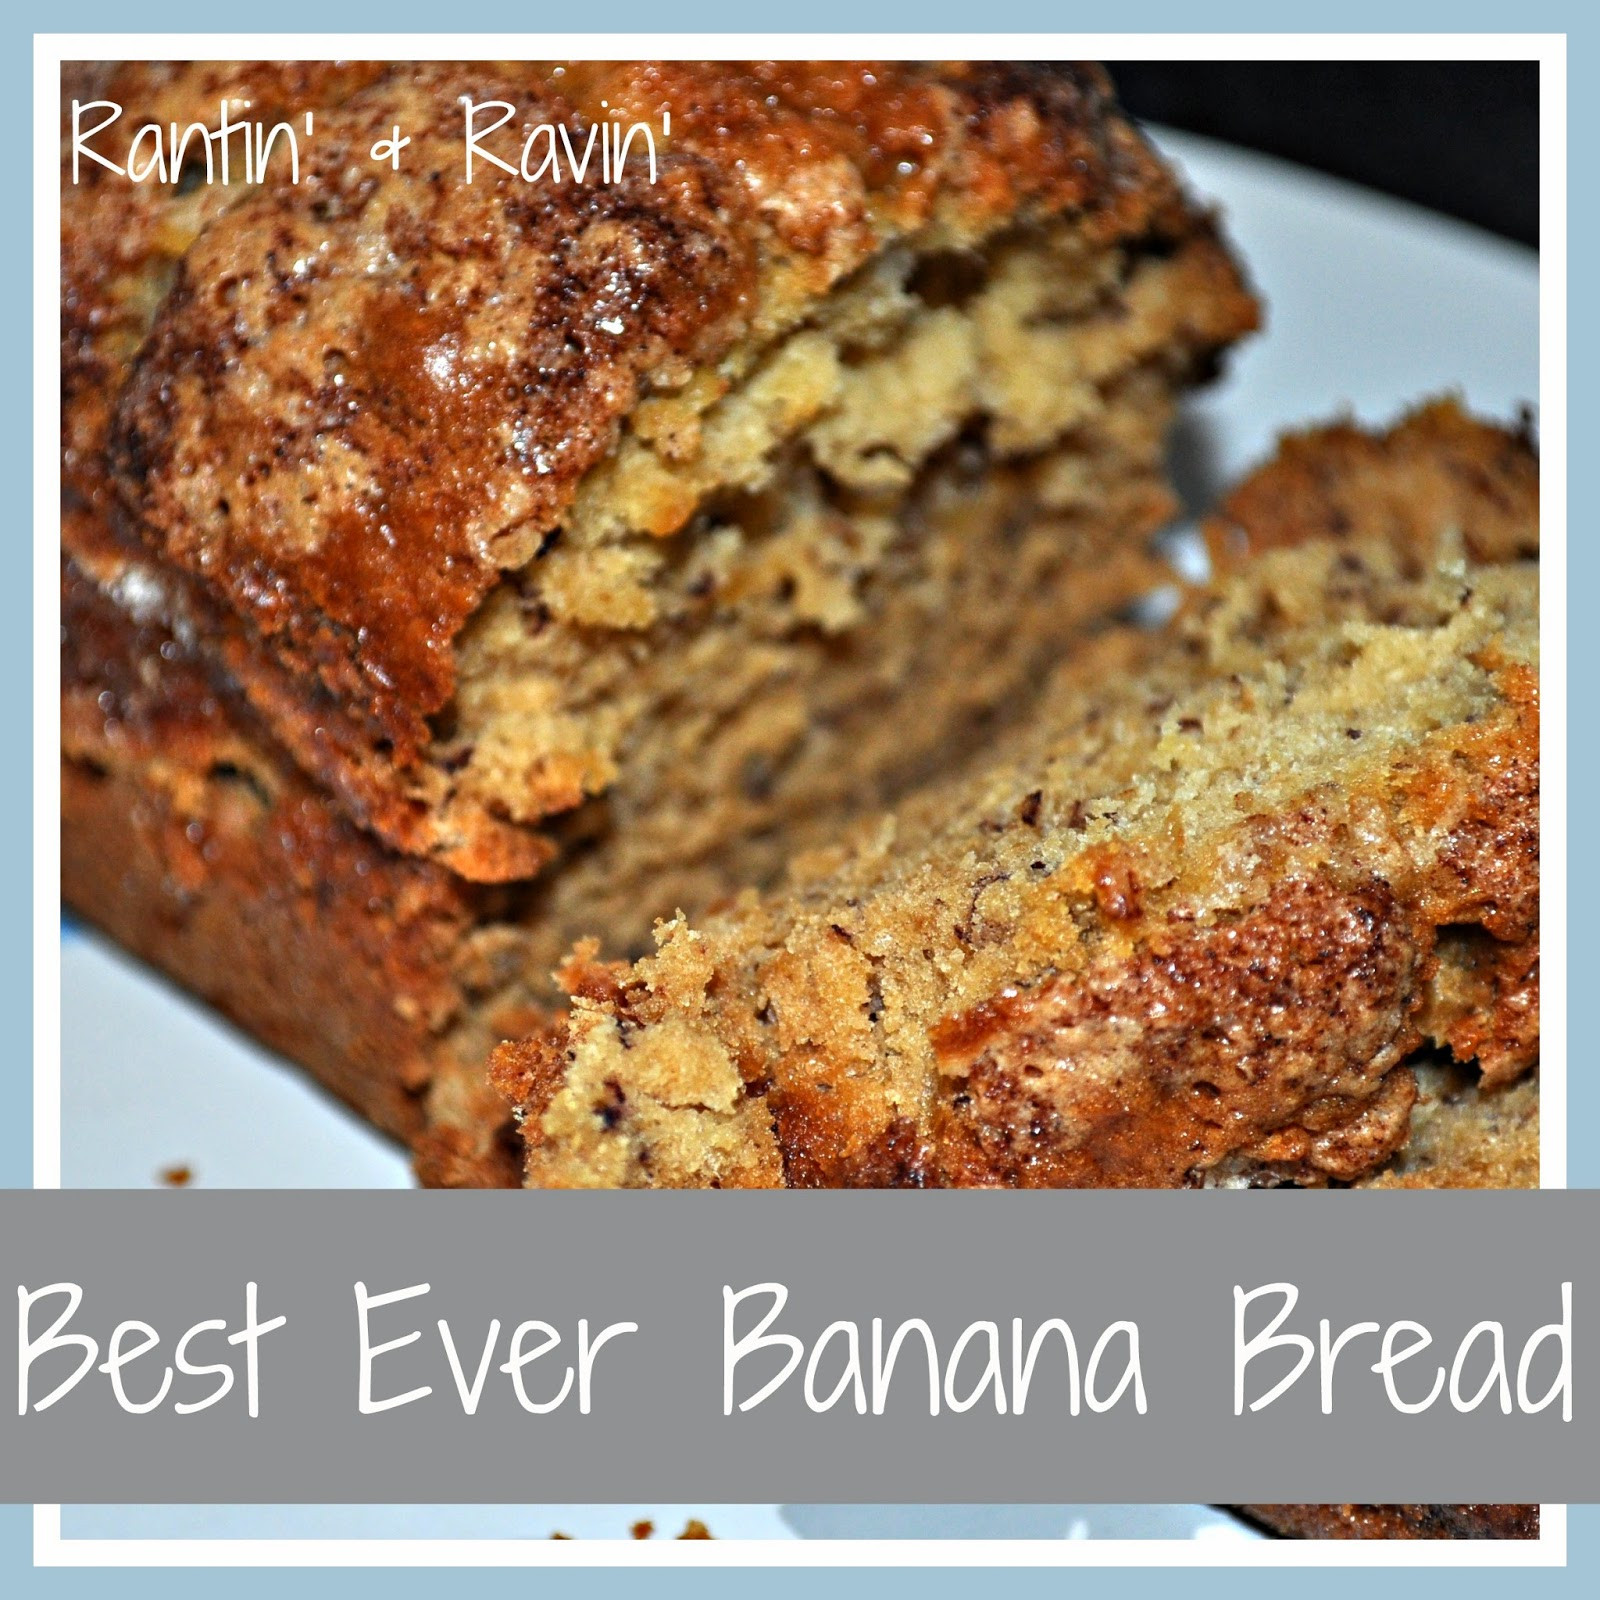 Best Ever Banana Bread
 Rantin & Ravin BEST EVER BANANA BREAD